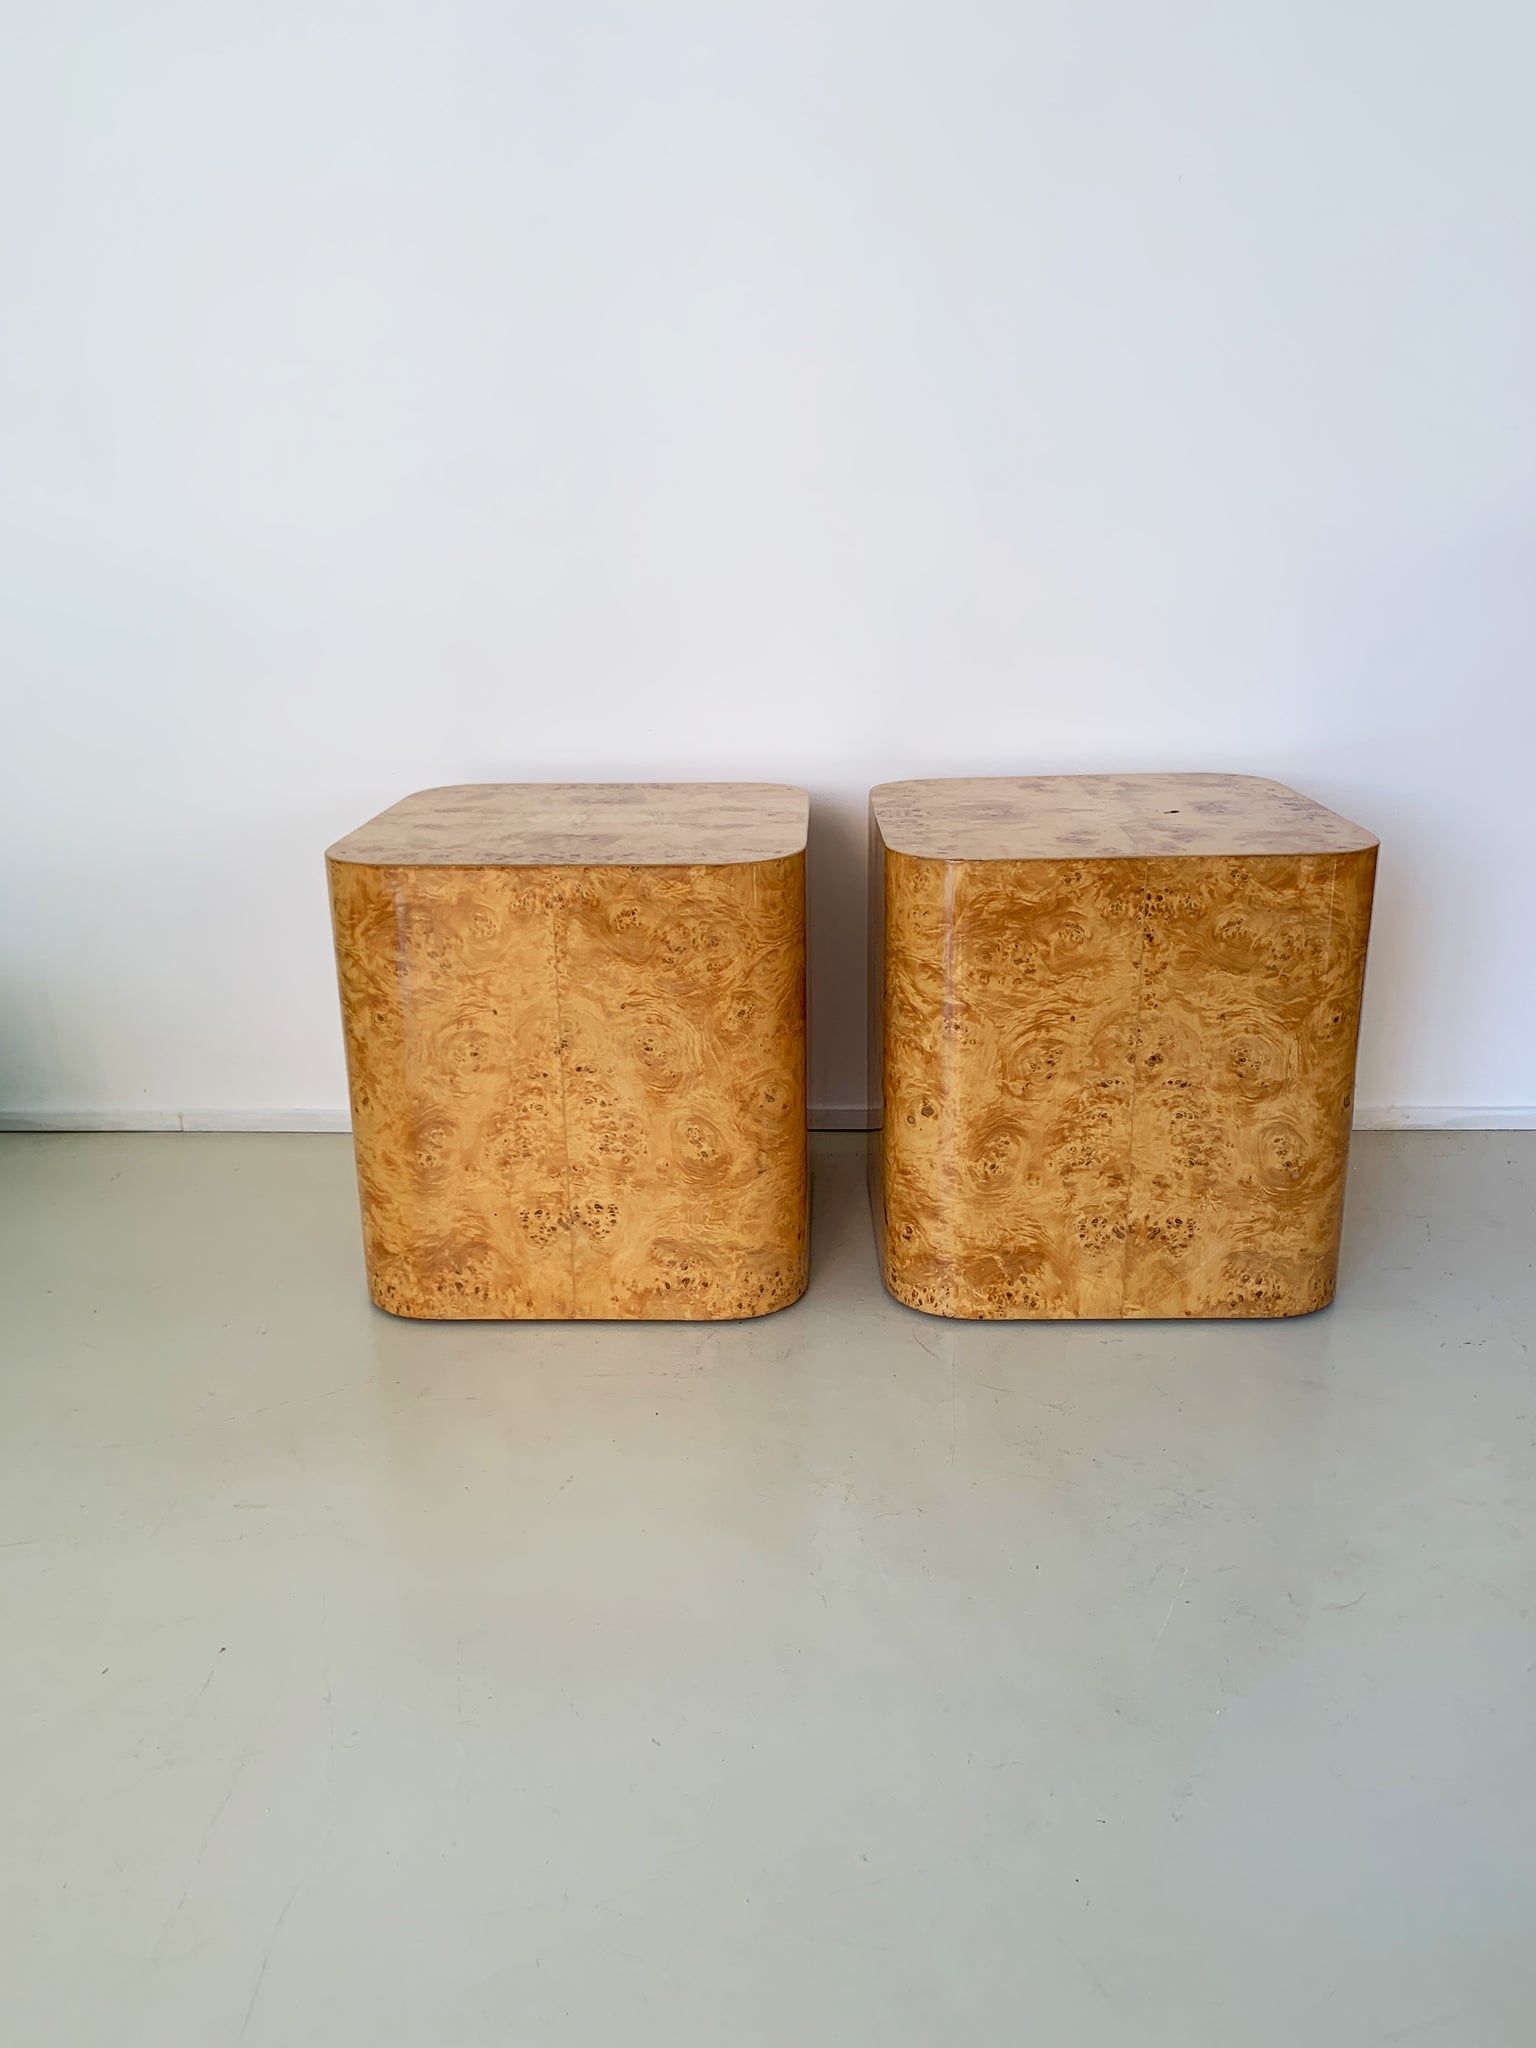 1970s Olive Burl Wood Cube Side Tables By Paul Mayen -Each